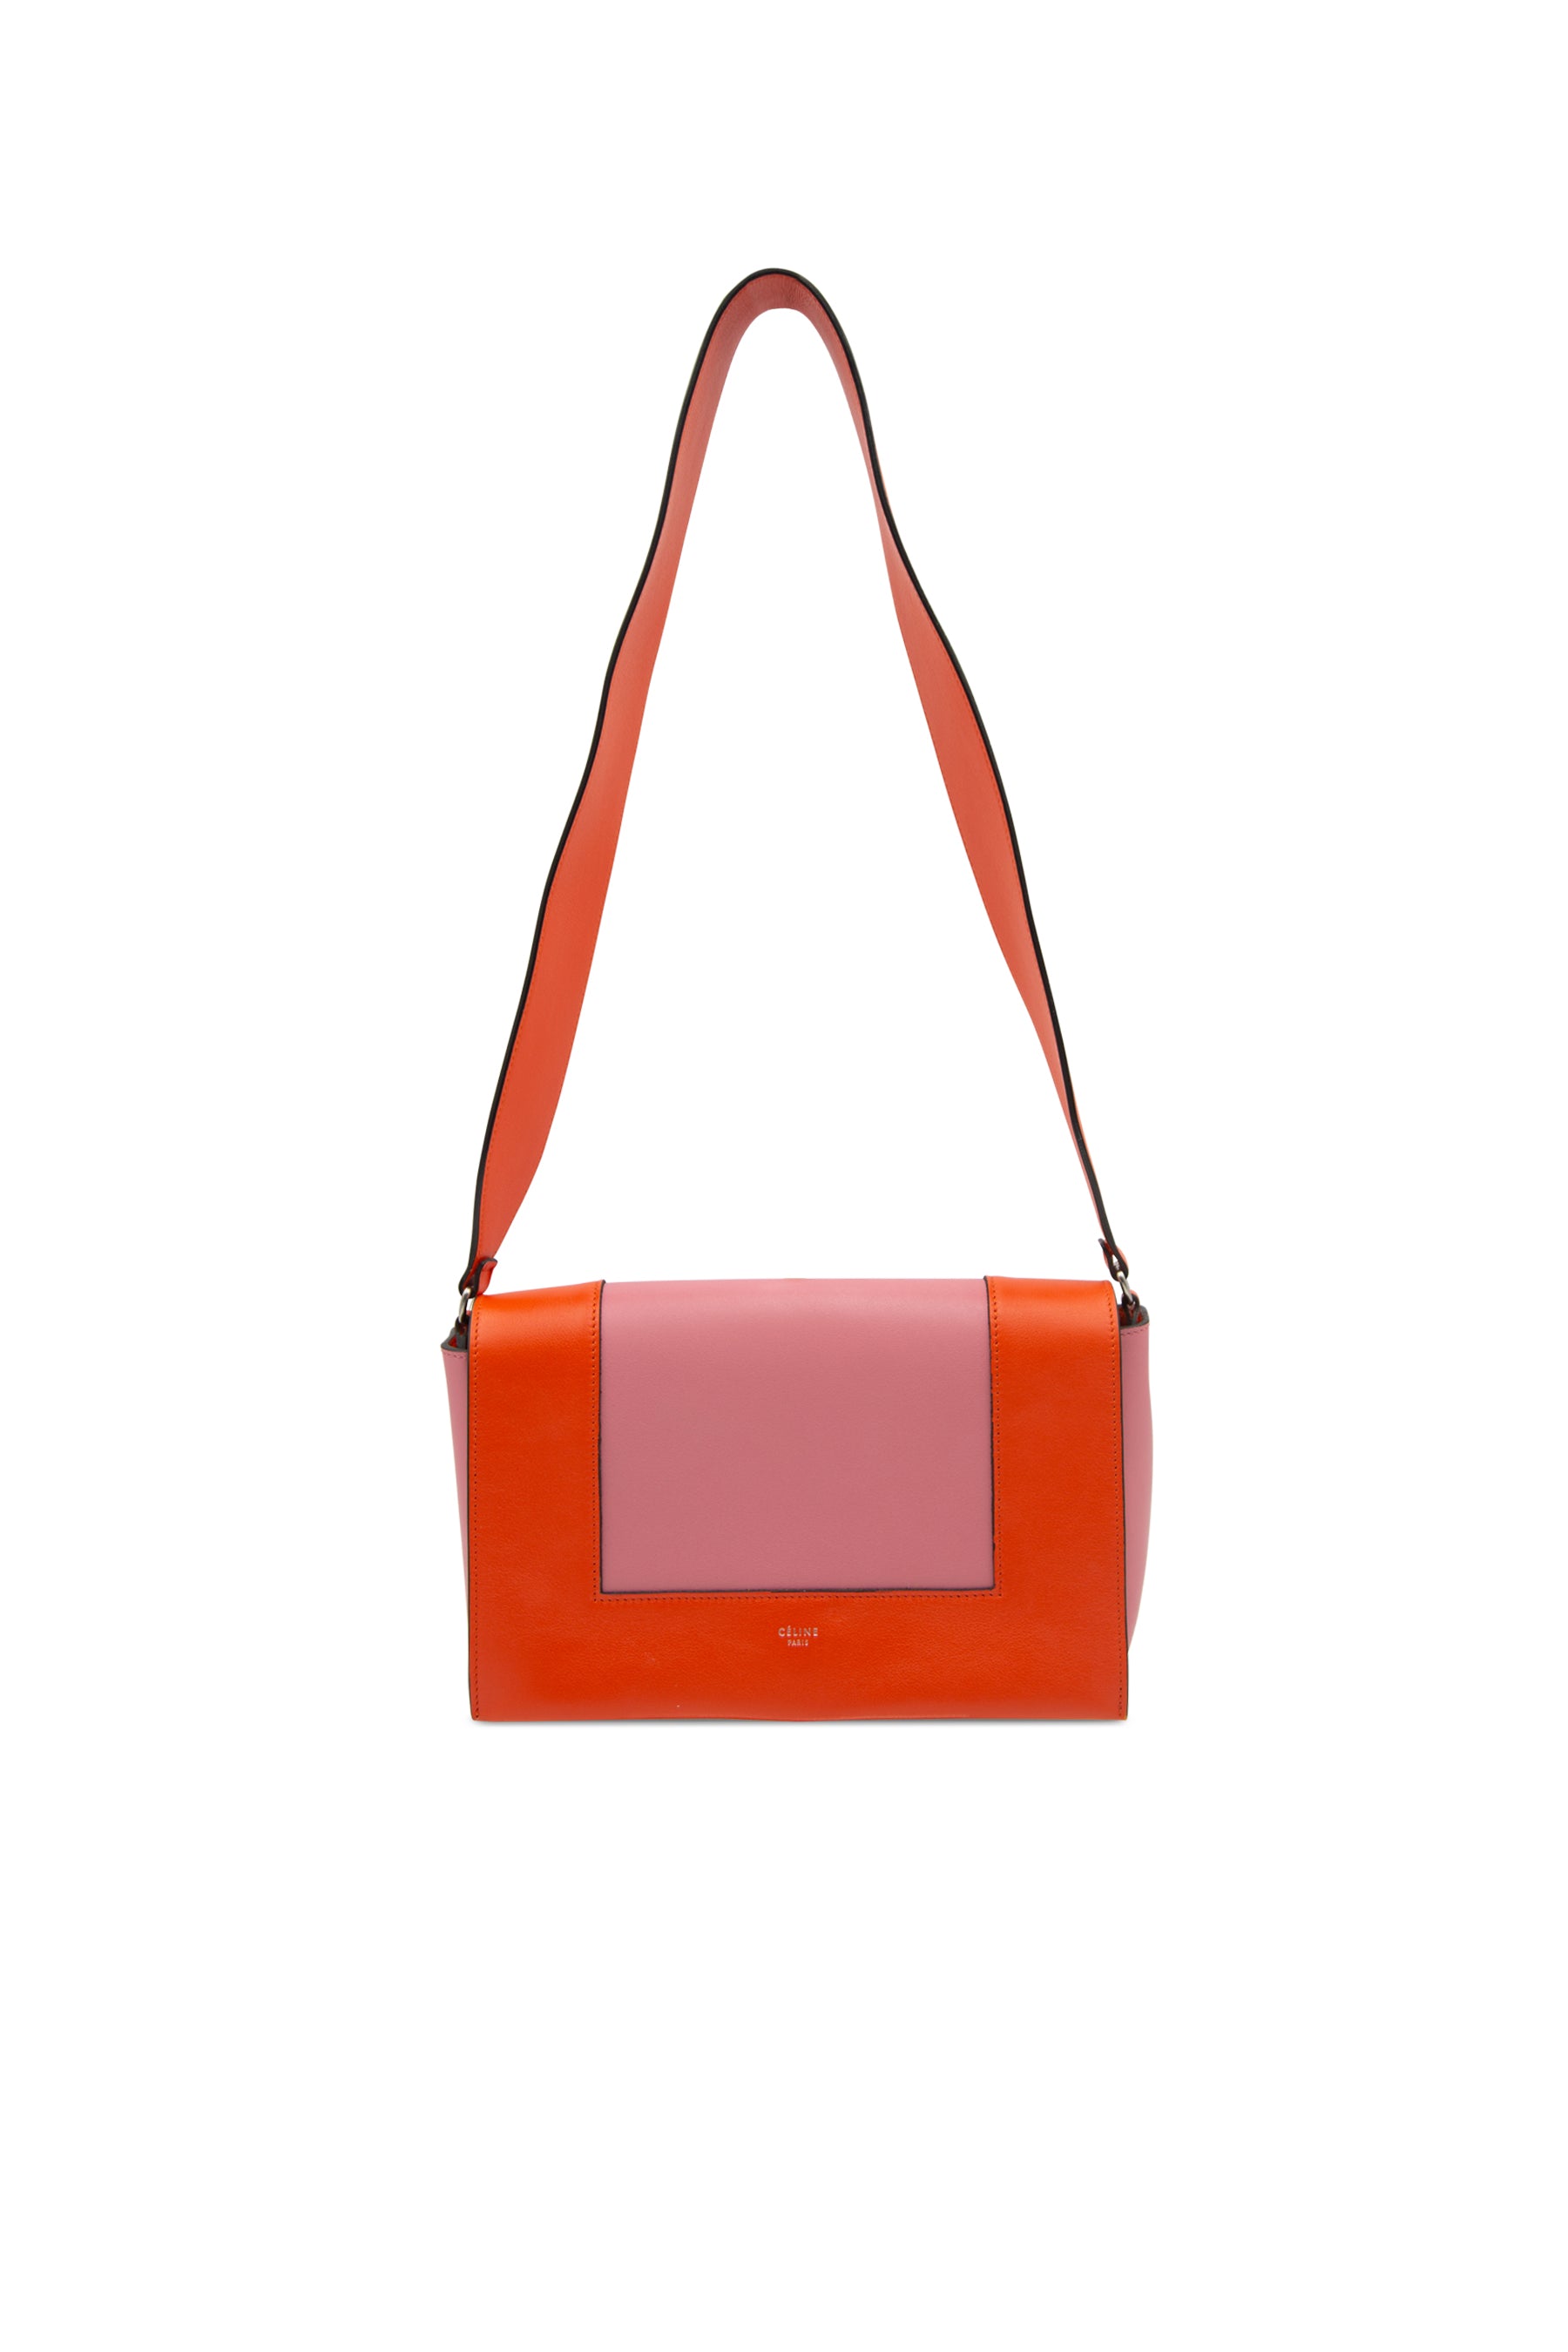 Dora's Celine sling bag